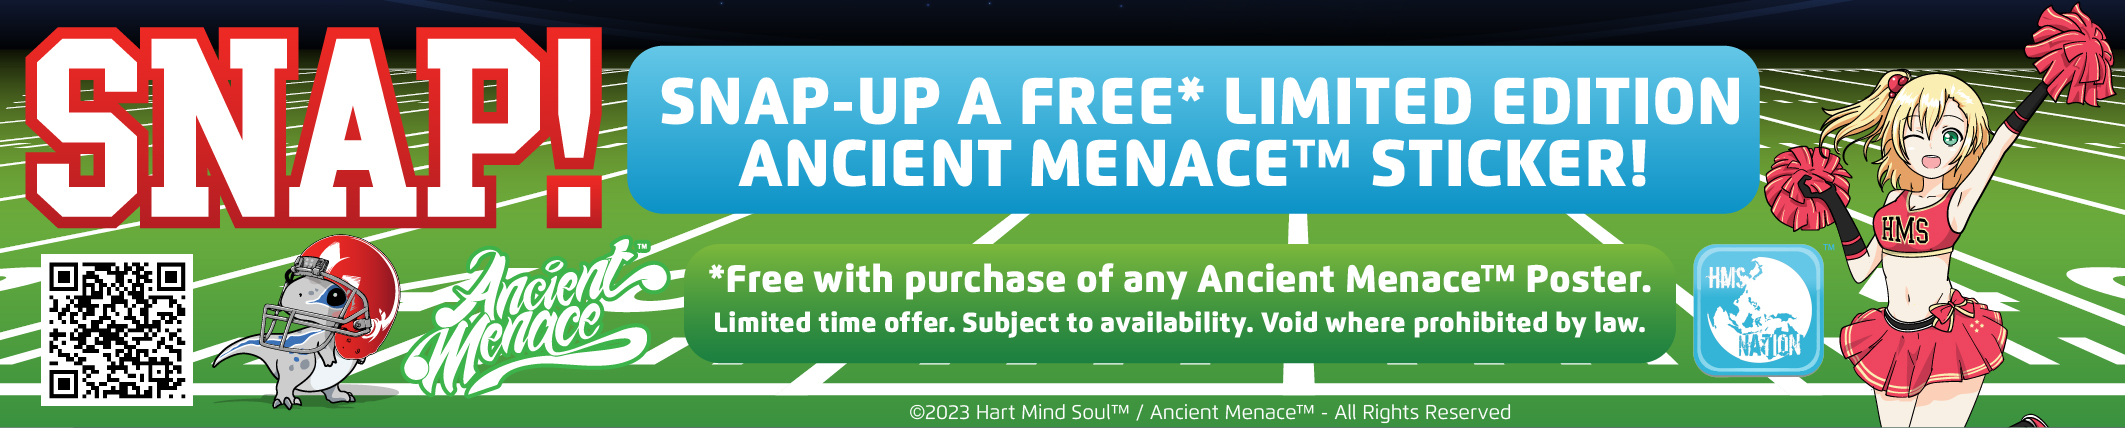 free stickers Ancient Menace Hart Mind Soul HMS nation